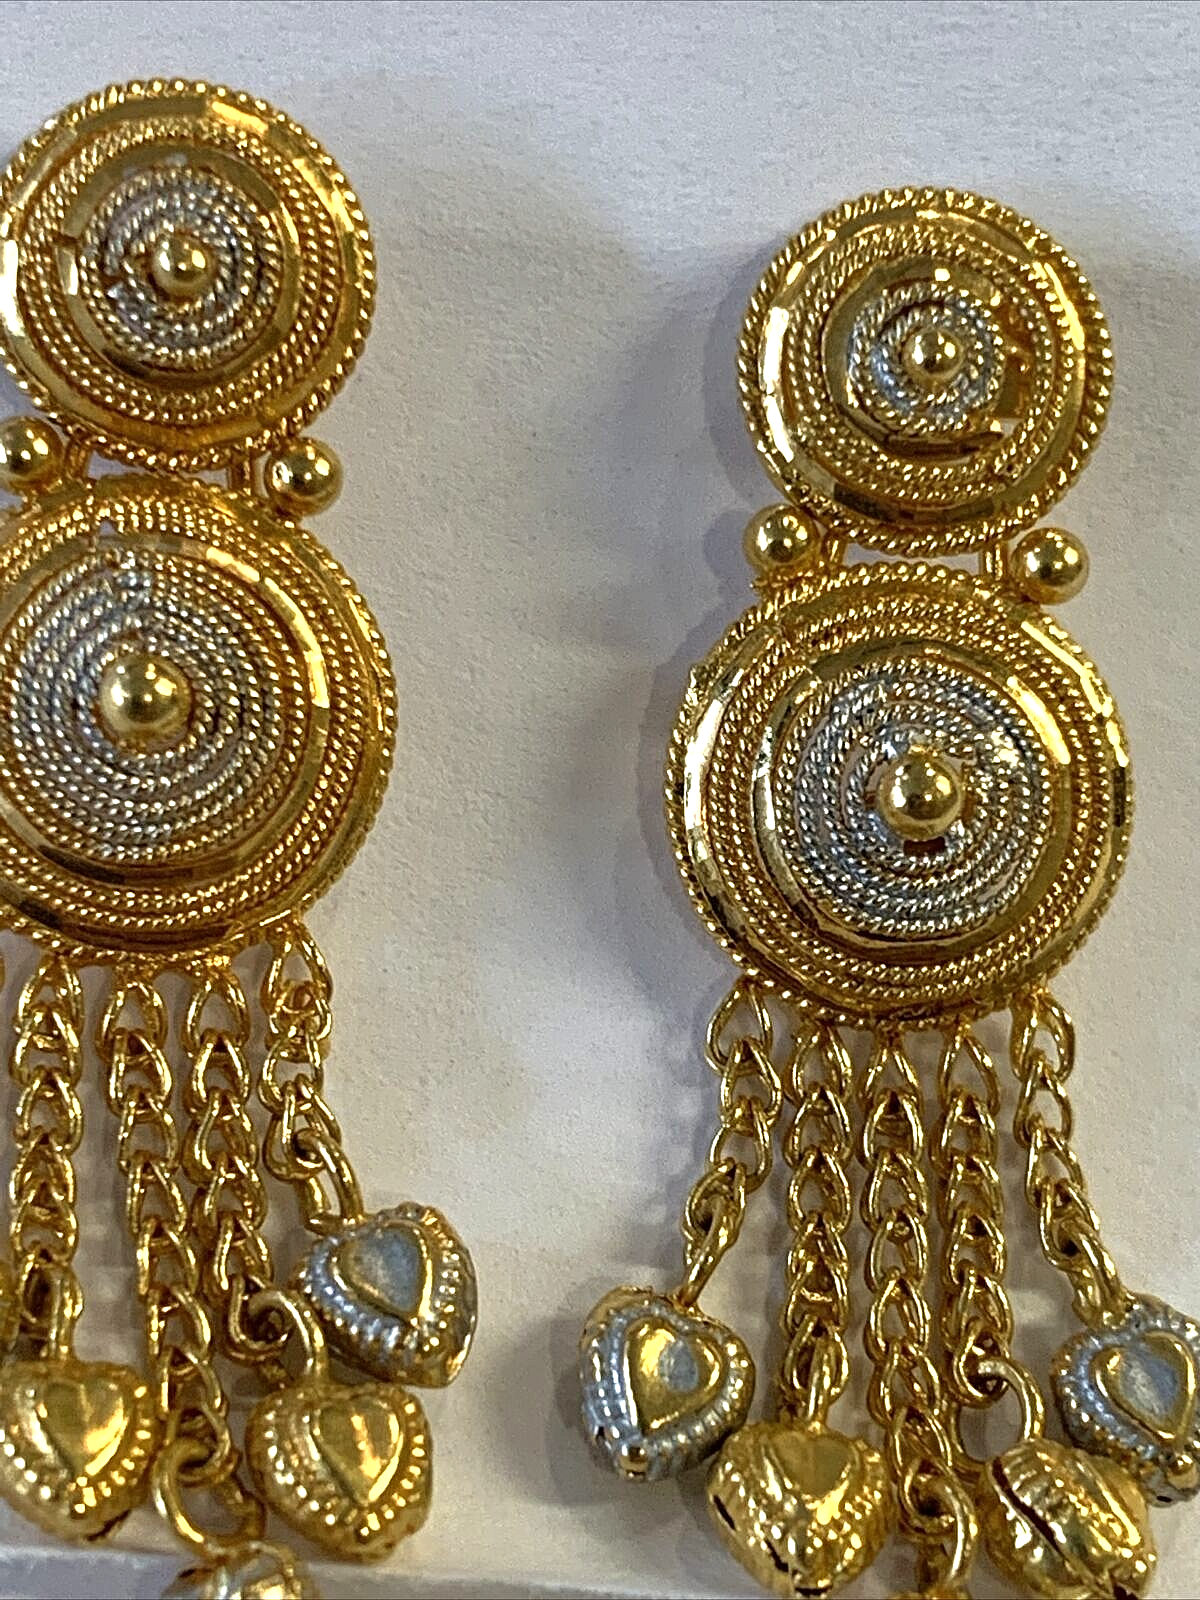 916 / 22k Gold Dangle Earrings - Screwbacks